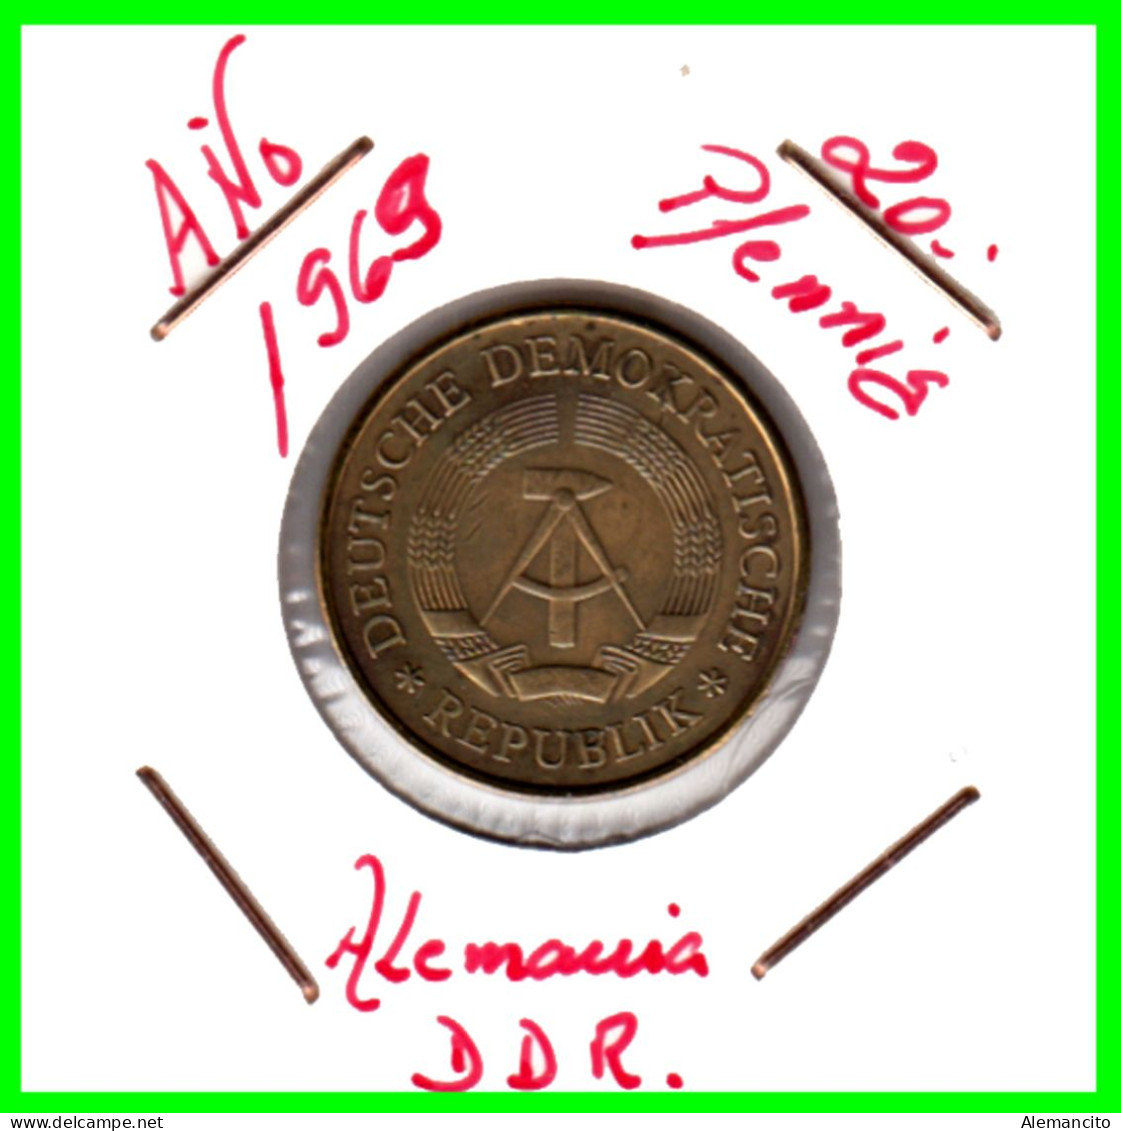 ( GERMANY DDR ) REPUBLICA DEMOCRATICA DE ALEMANIA ( DDR ) MONEDAS DE 20 PFENNING AÑO 1969  MONEDA EMBLEMA CECA- A - 20 Pfennig